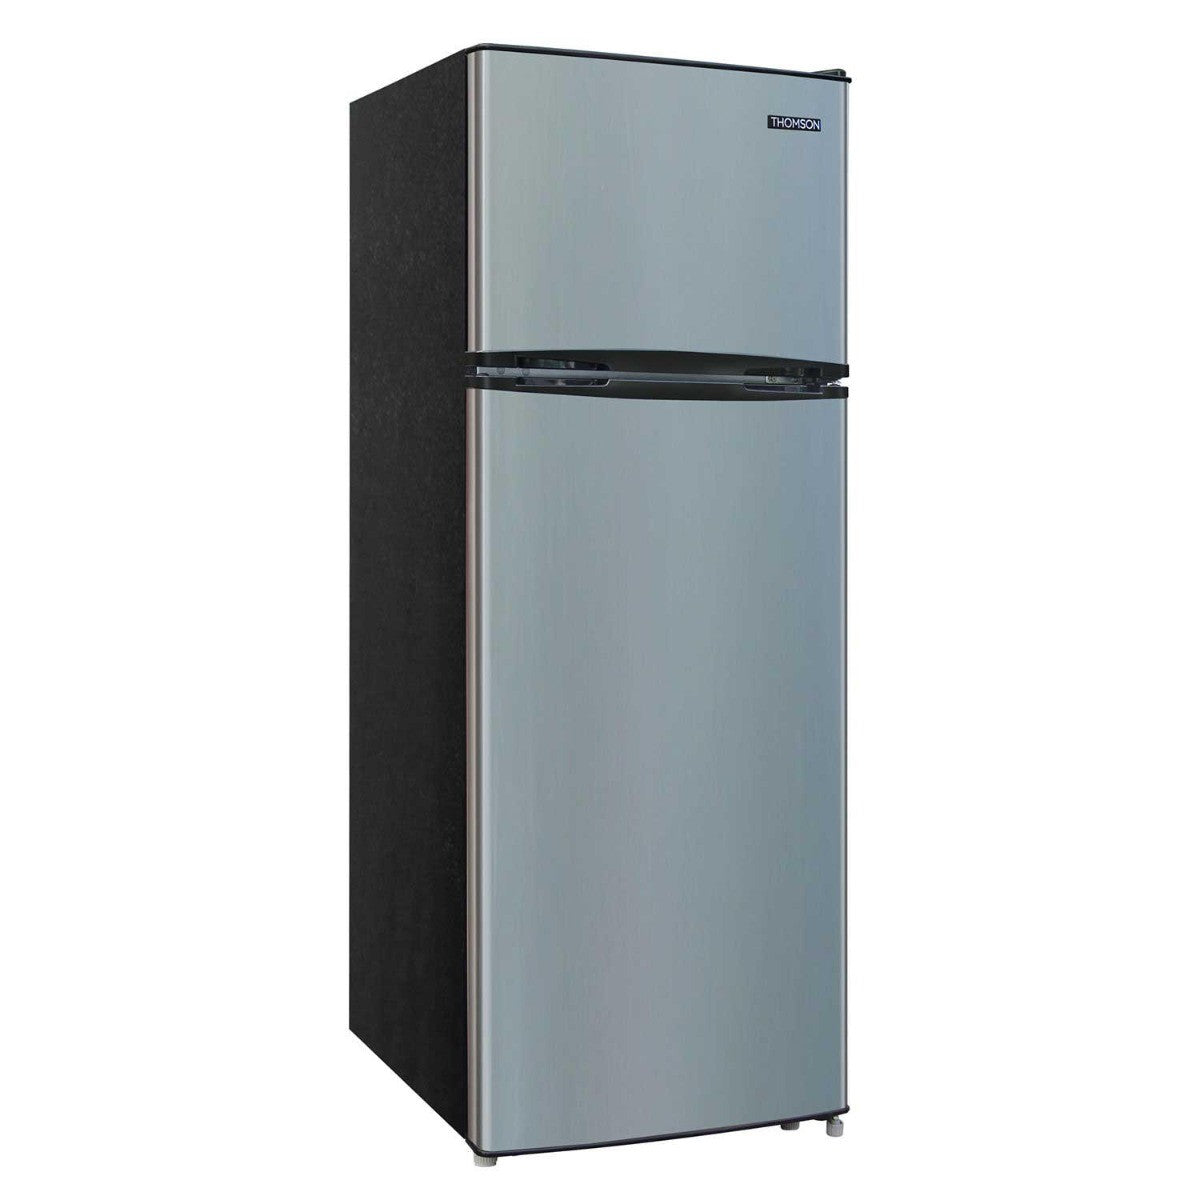 Thomson 7.5 CF Refrigerator with Top Freezer Platinum TFR725